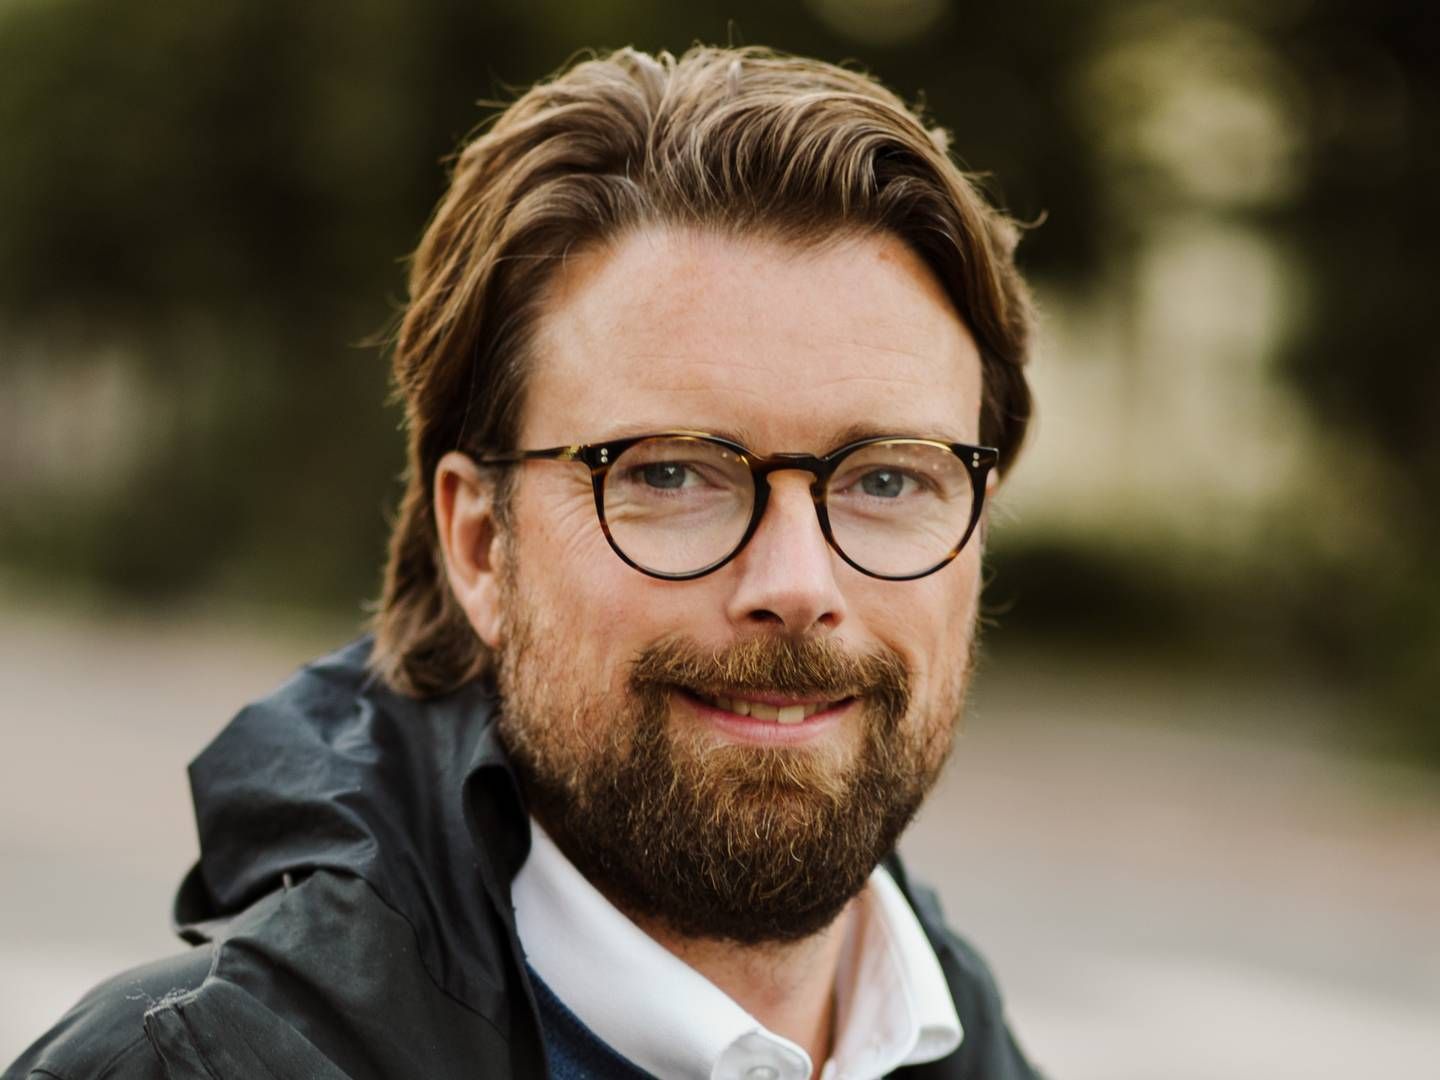 Joar Hagatun, CEO and co-founder of Kron | Photo: KRON PR / Tobias Østmoen